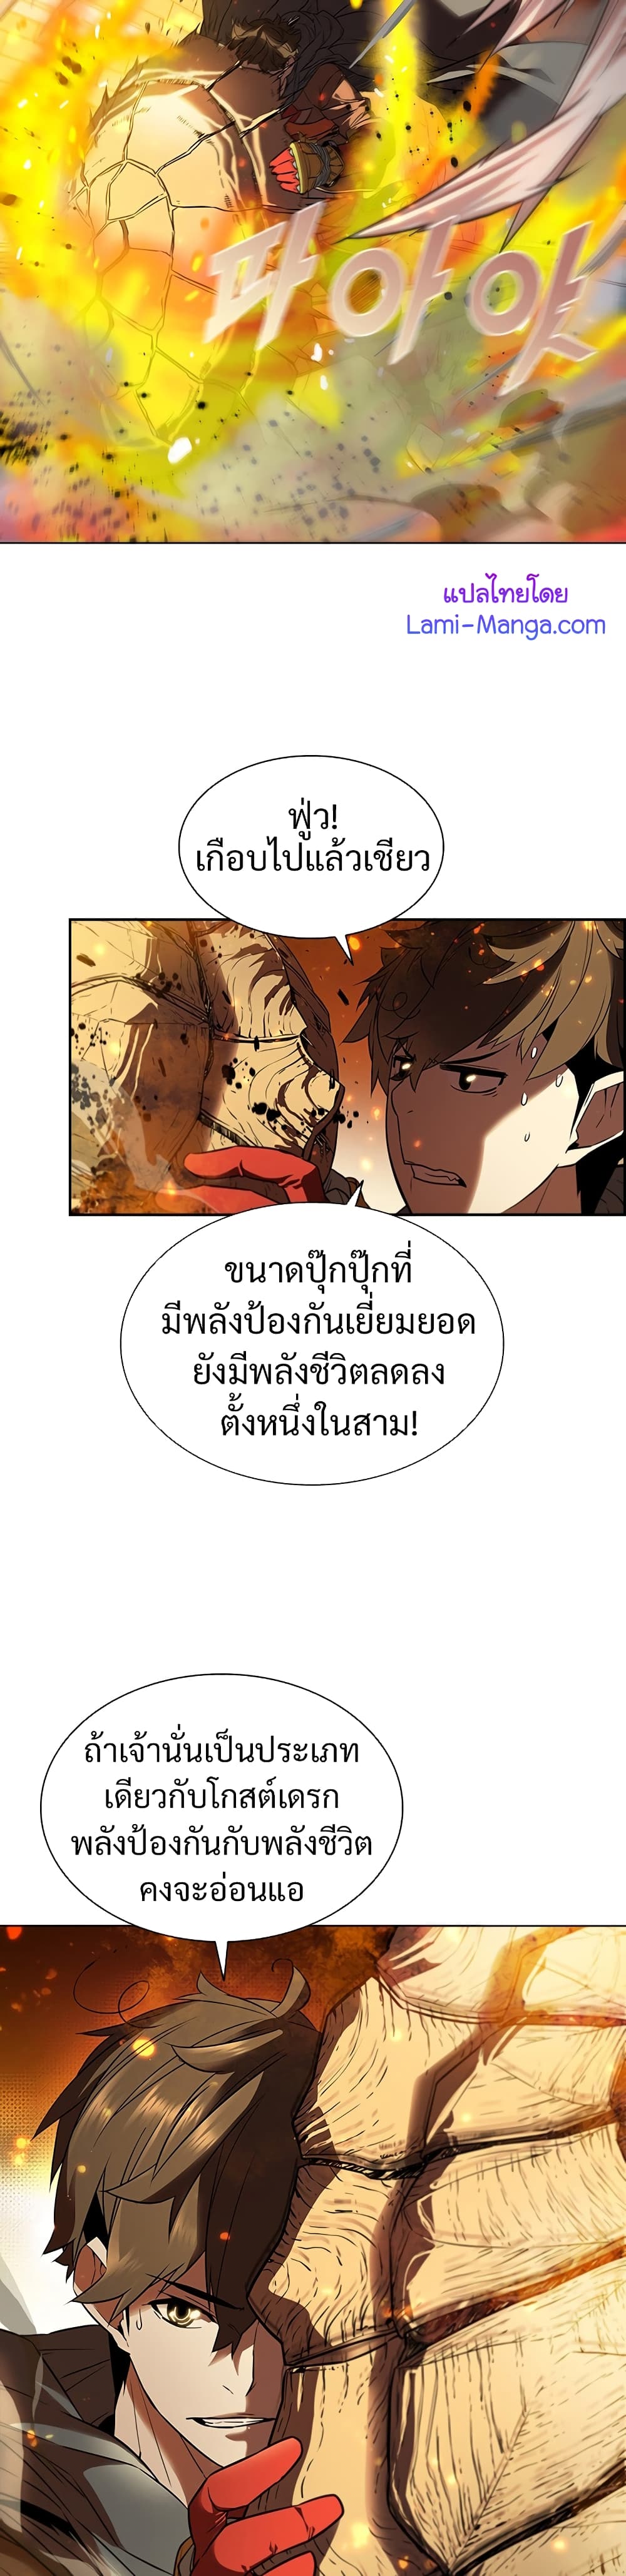 Taming Master 21 แปลไทย